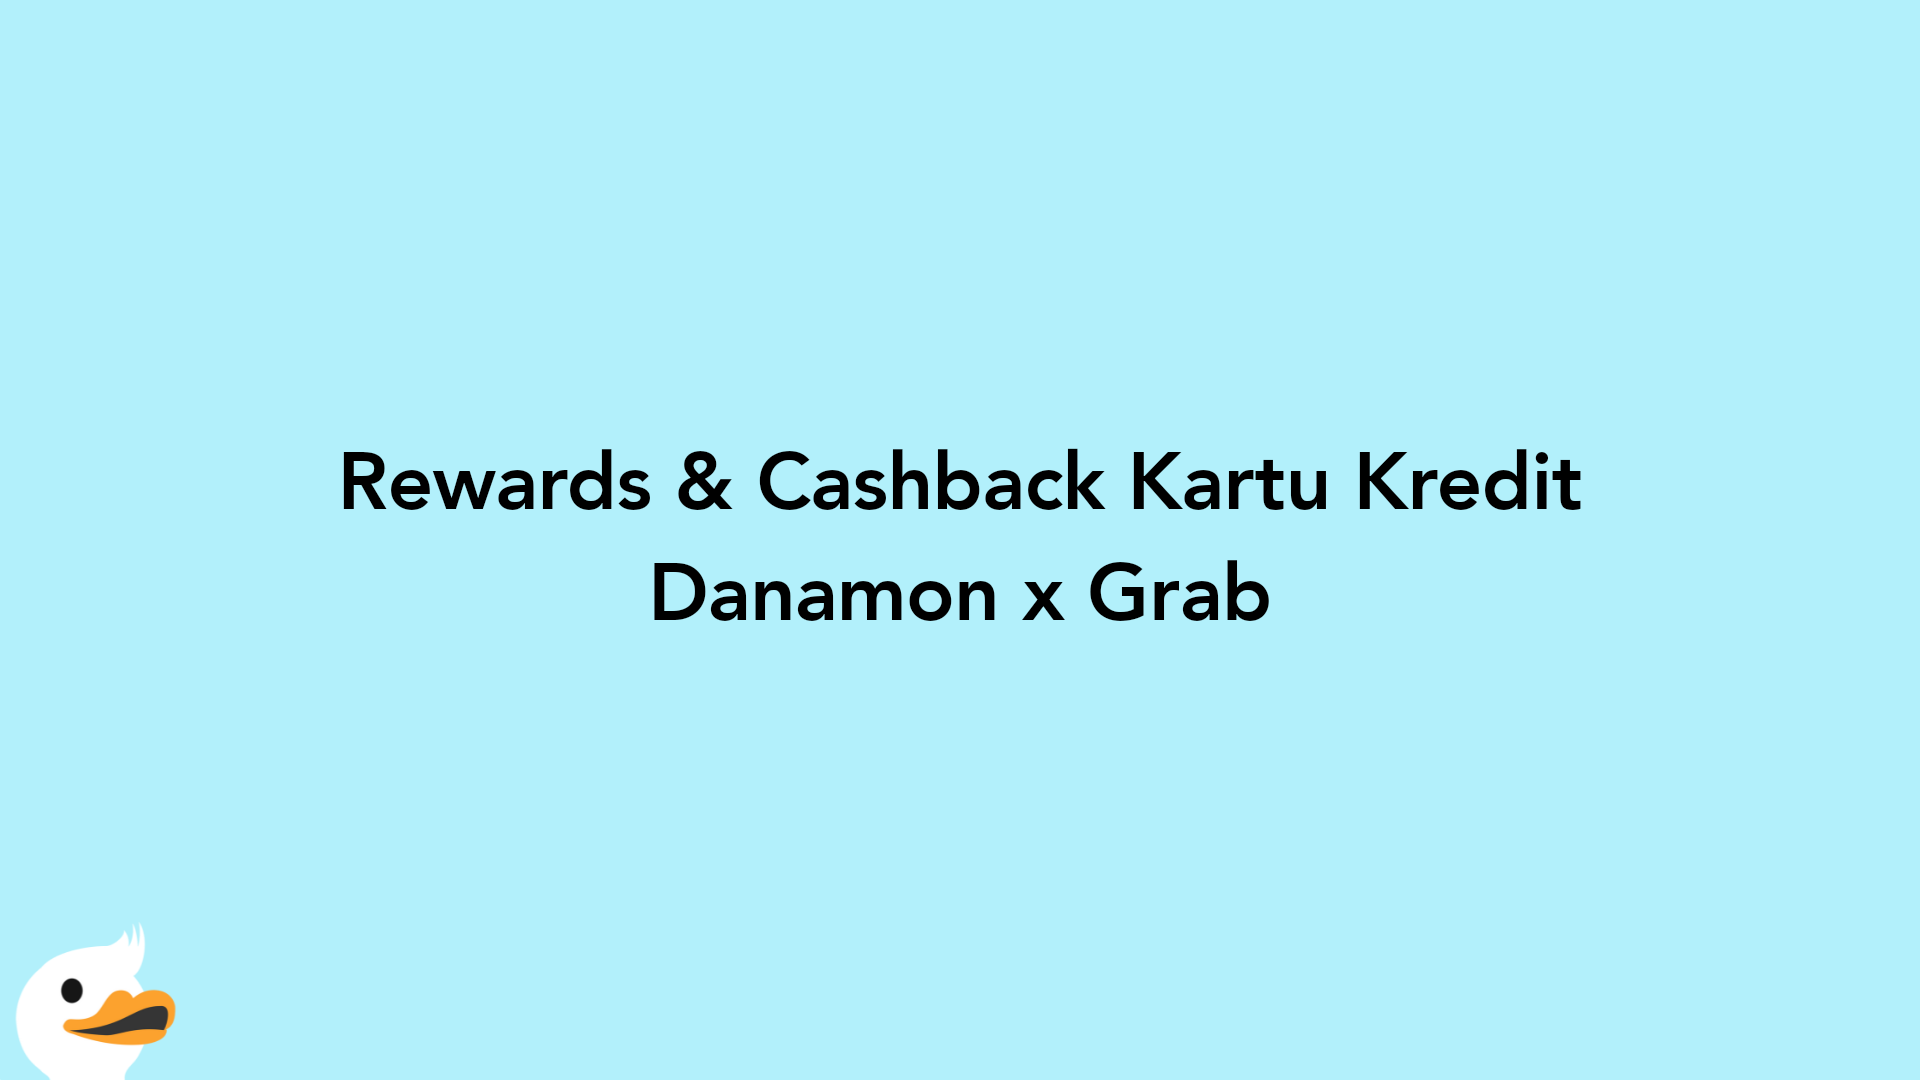 Rewards & Cashback Kartu Kredit Danamon x Grab